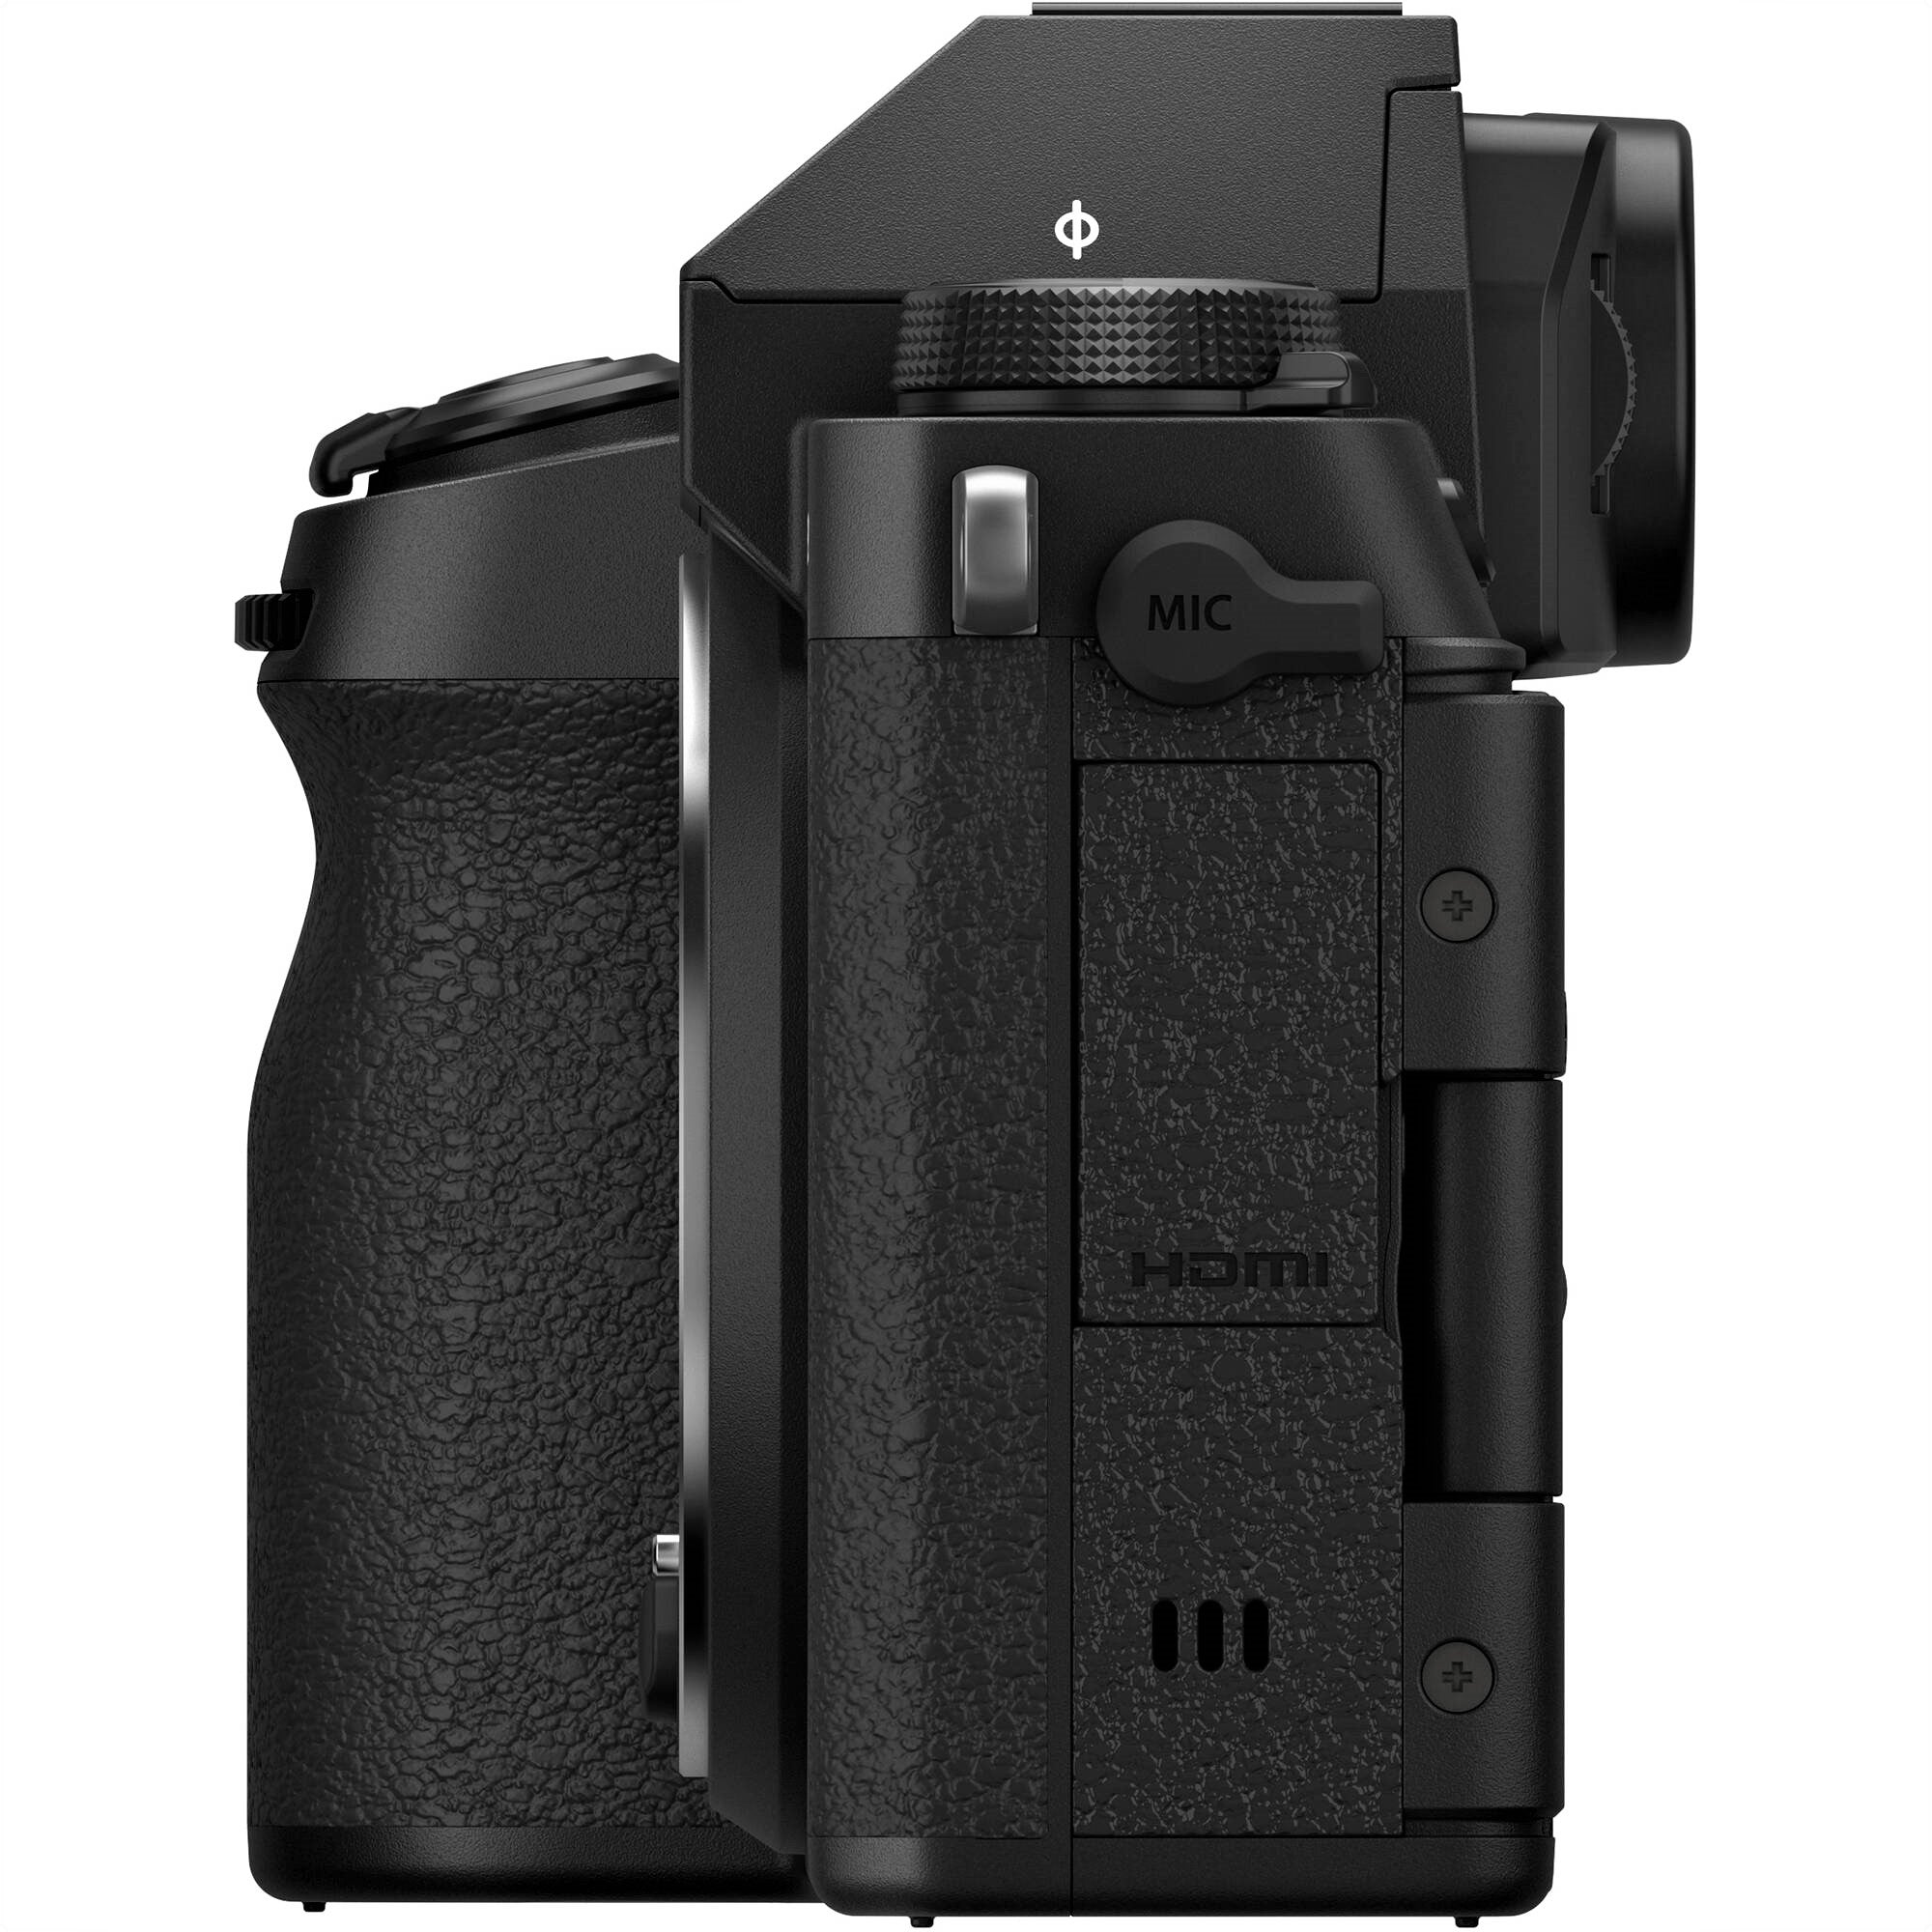 Fujifilm X-S20 Mirrorless Digital Camera (Black)